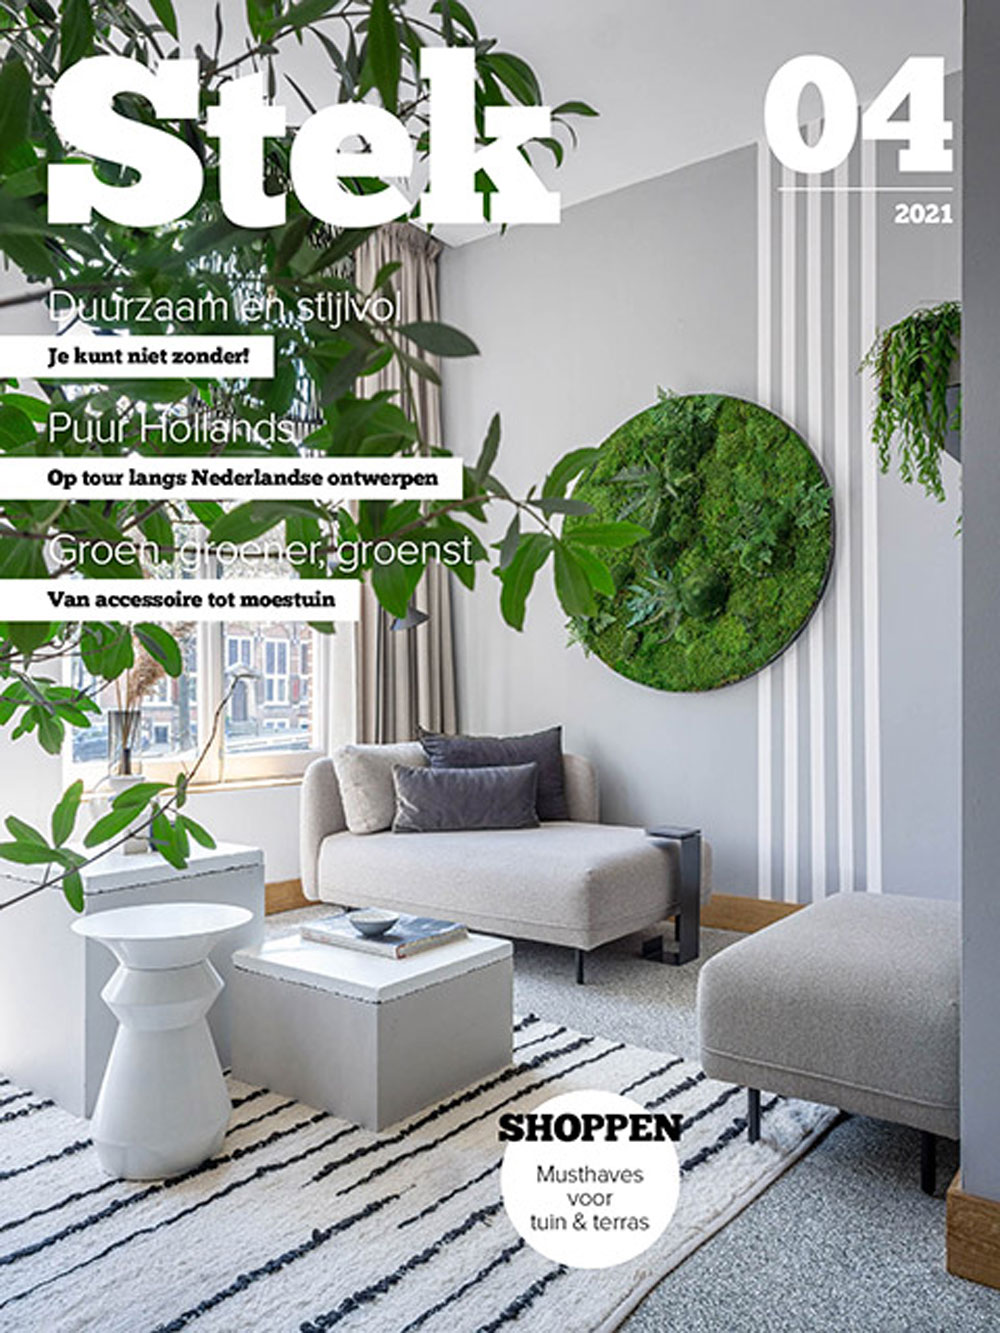 Stek woon- & lifestyle magazine | Herenhuis Oudegracht